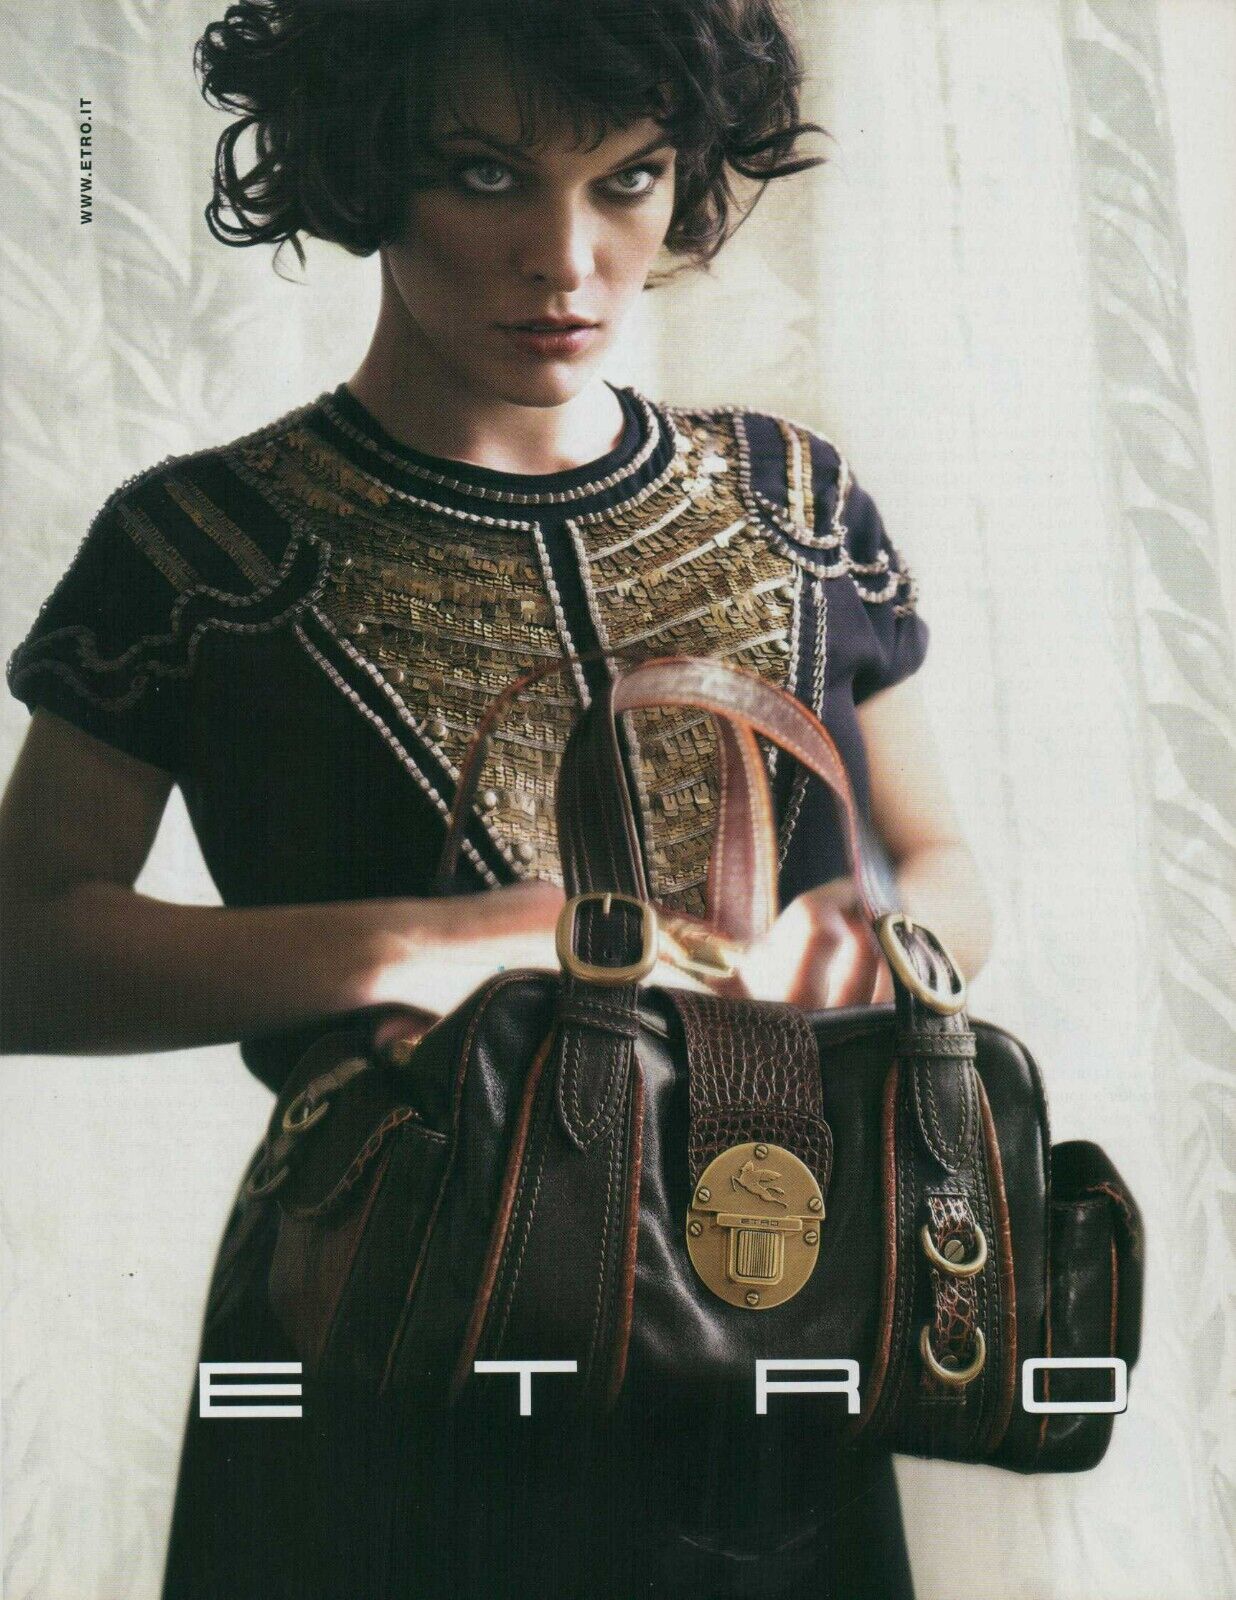 ETRO Bags Magazine Print Ad Advert  handbag fashion Accessoires 2006